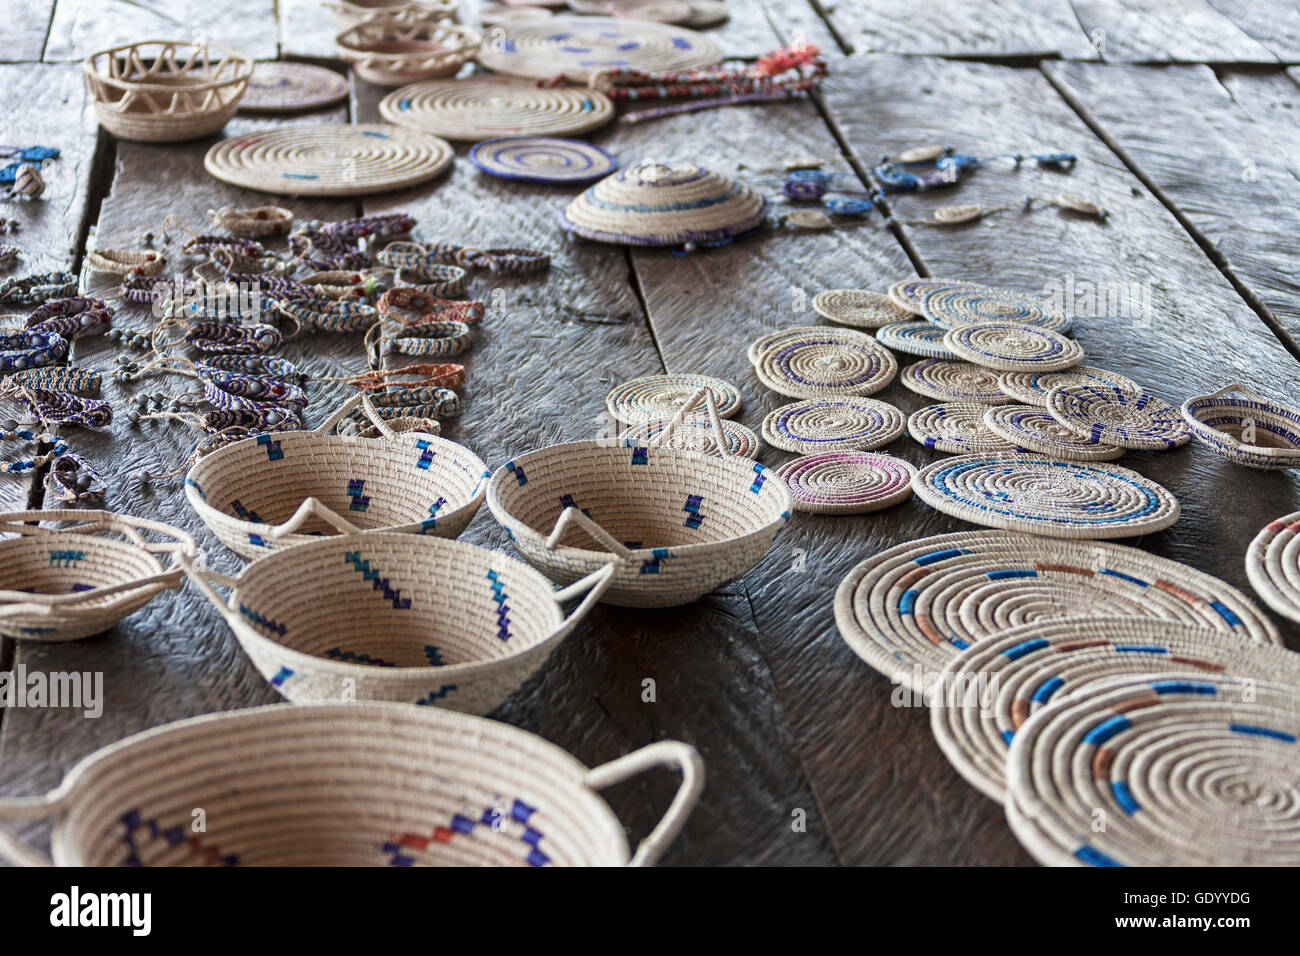 Venezuelan handicrafts, Orinoco Delta, Venezuela Stock Photo